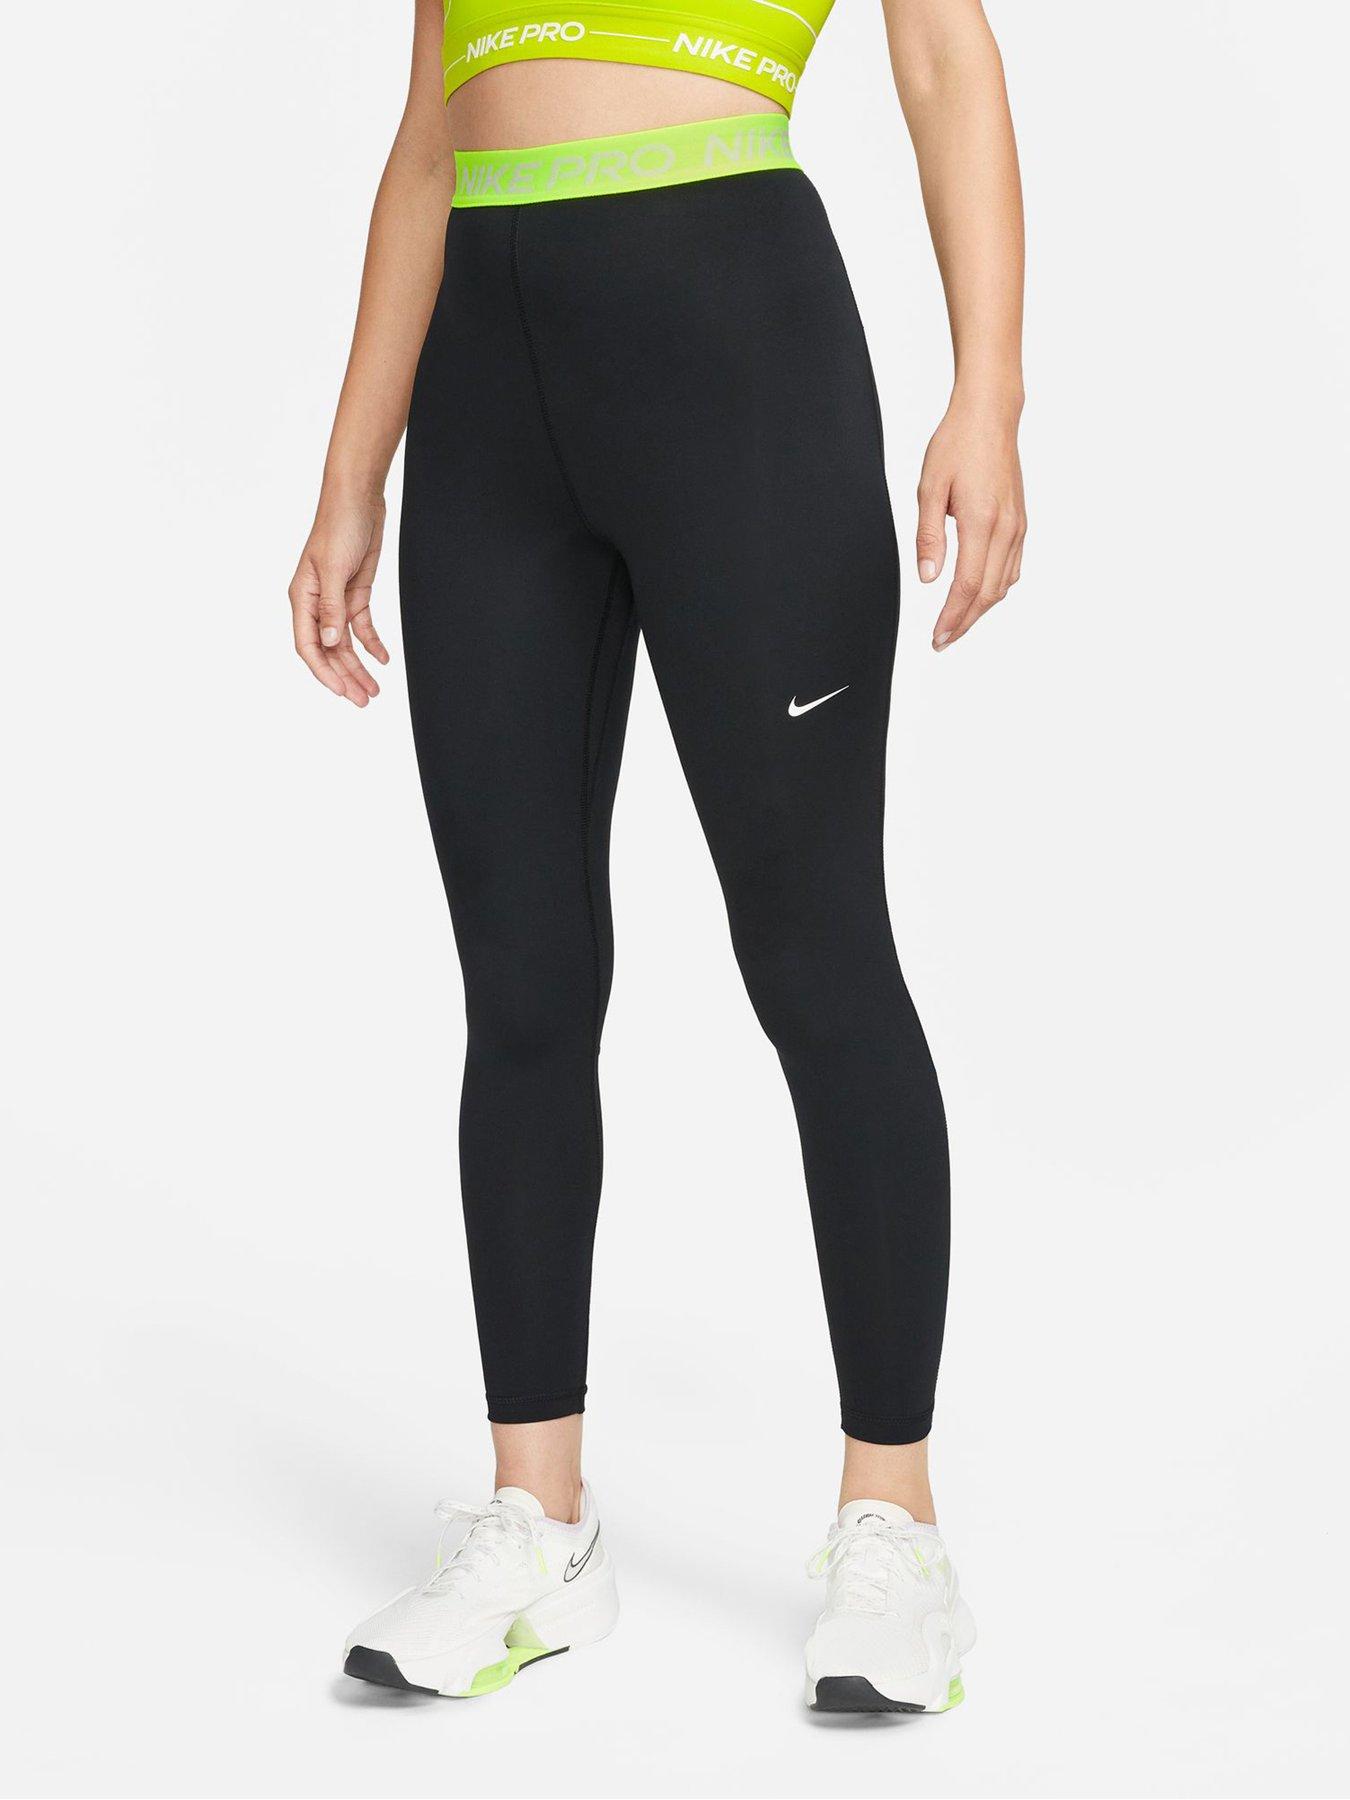 Nike Pro Tights, Damen Leggings, schwarz